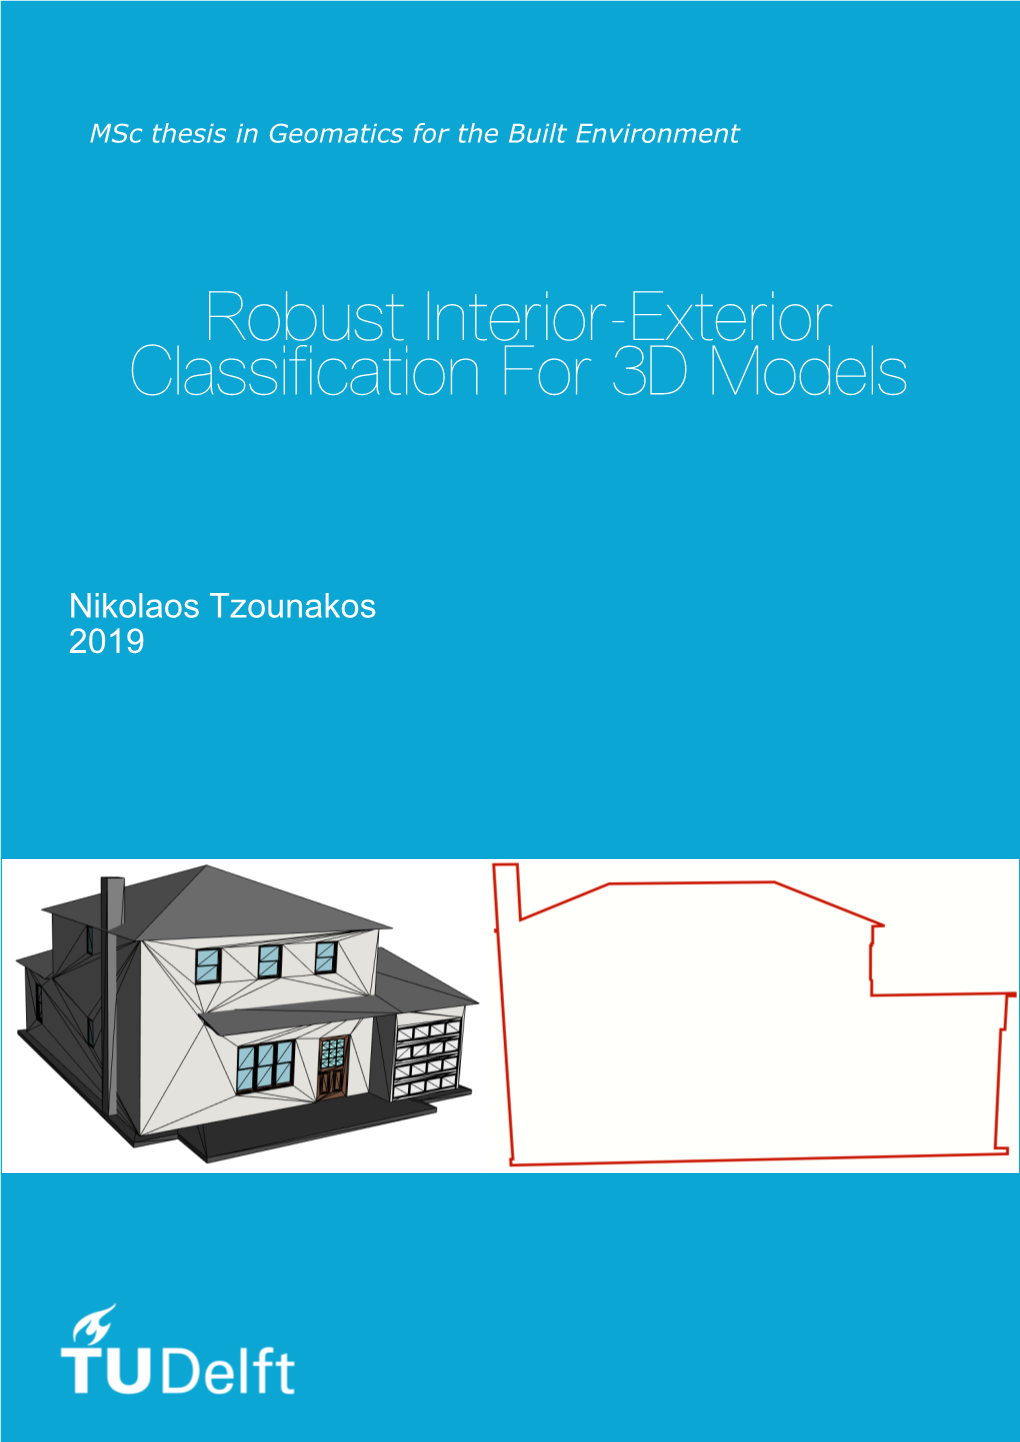 Robust Interior-Exterior Classification for 3D Models